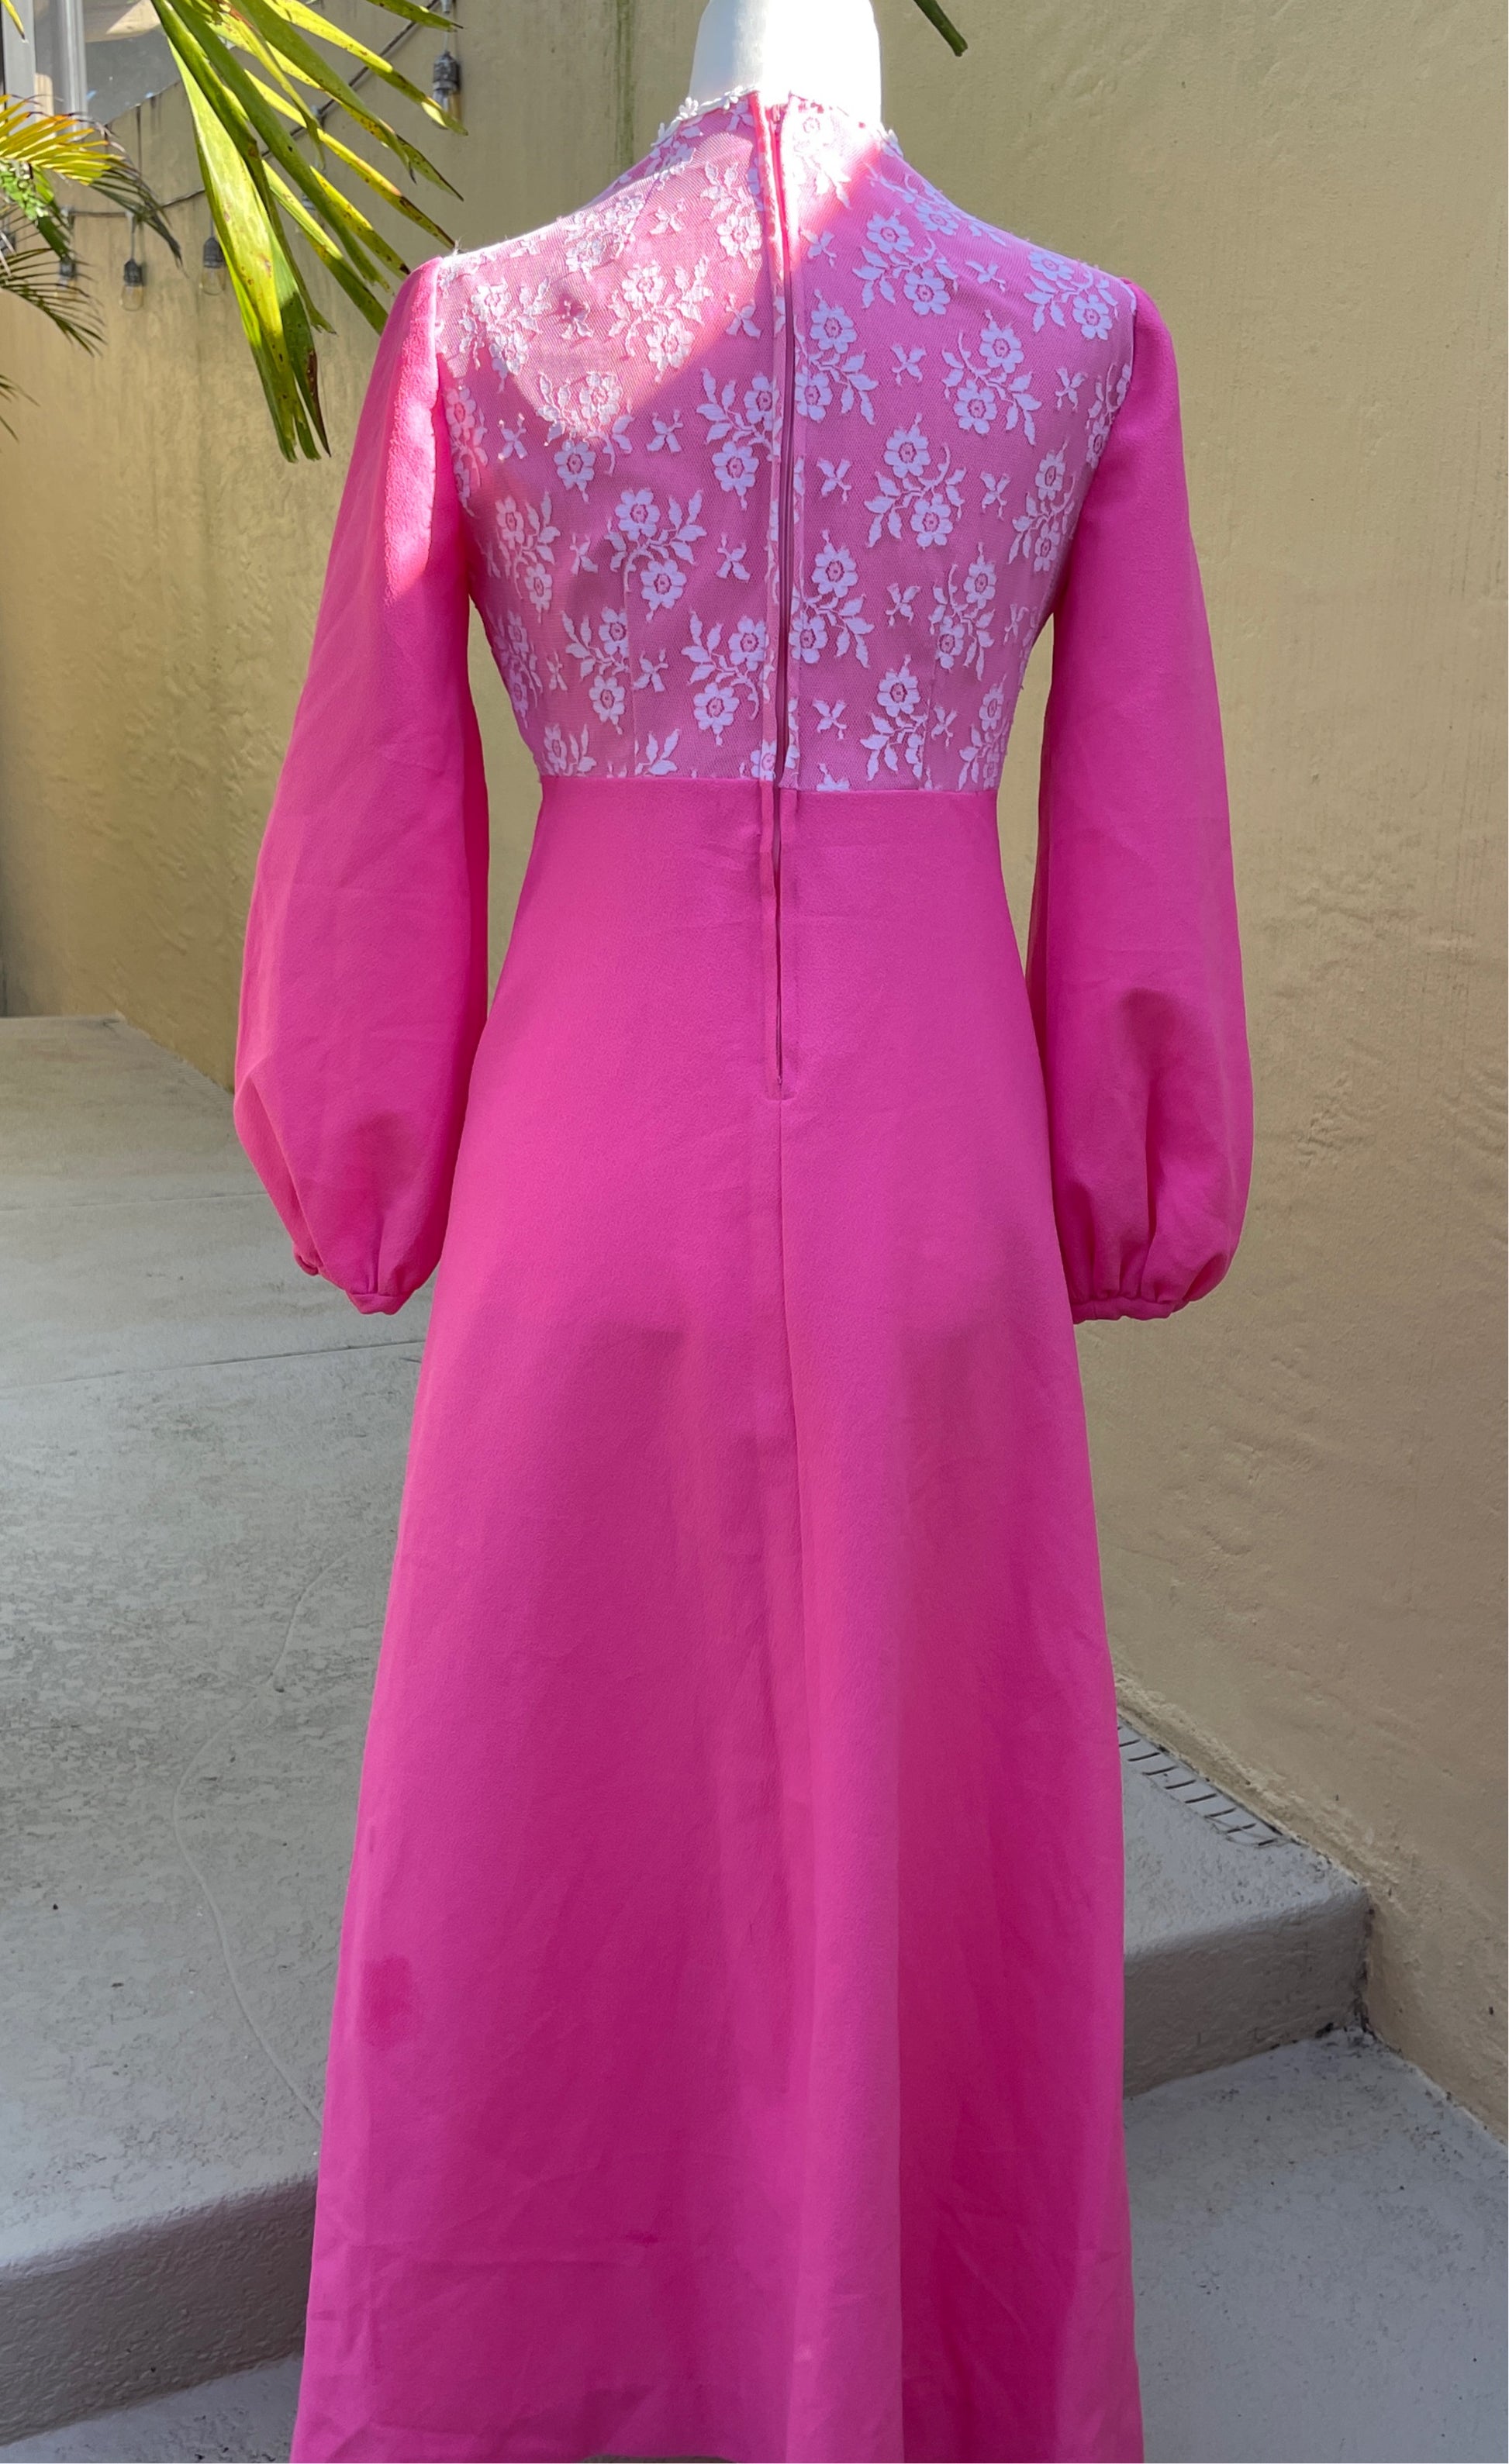  70s Vintage Pink Lace Romantic Long Sleeve Handmade Maxi Dress S